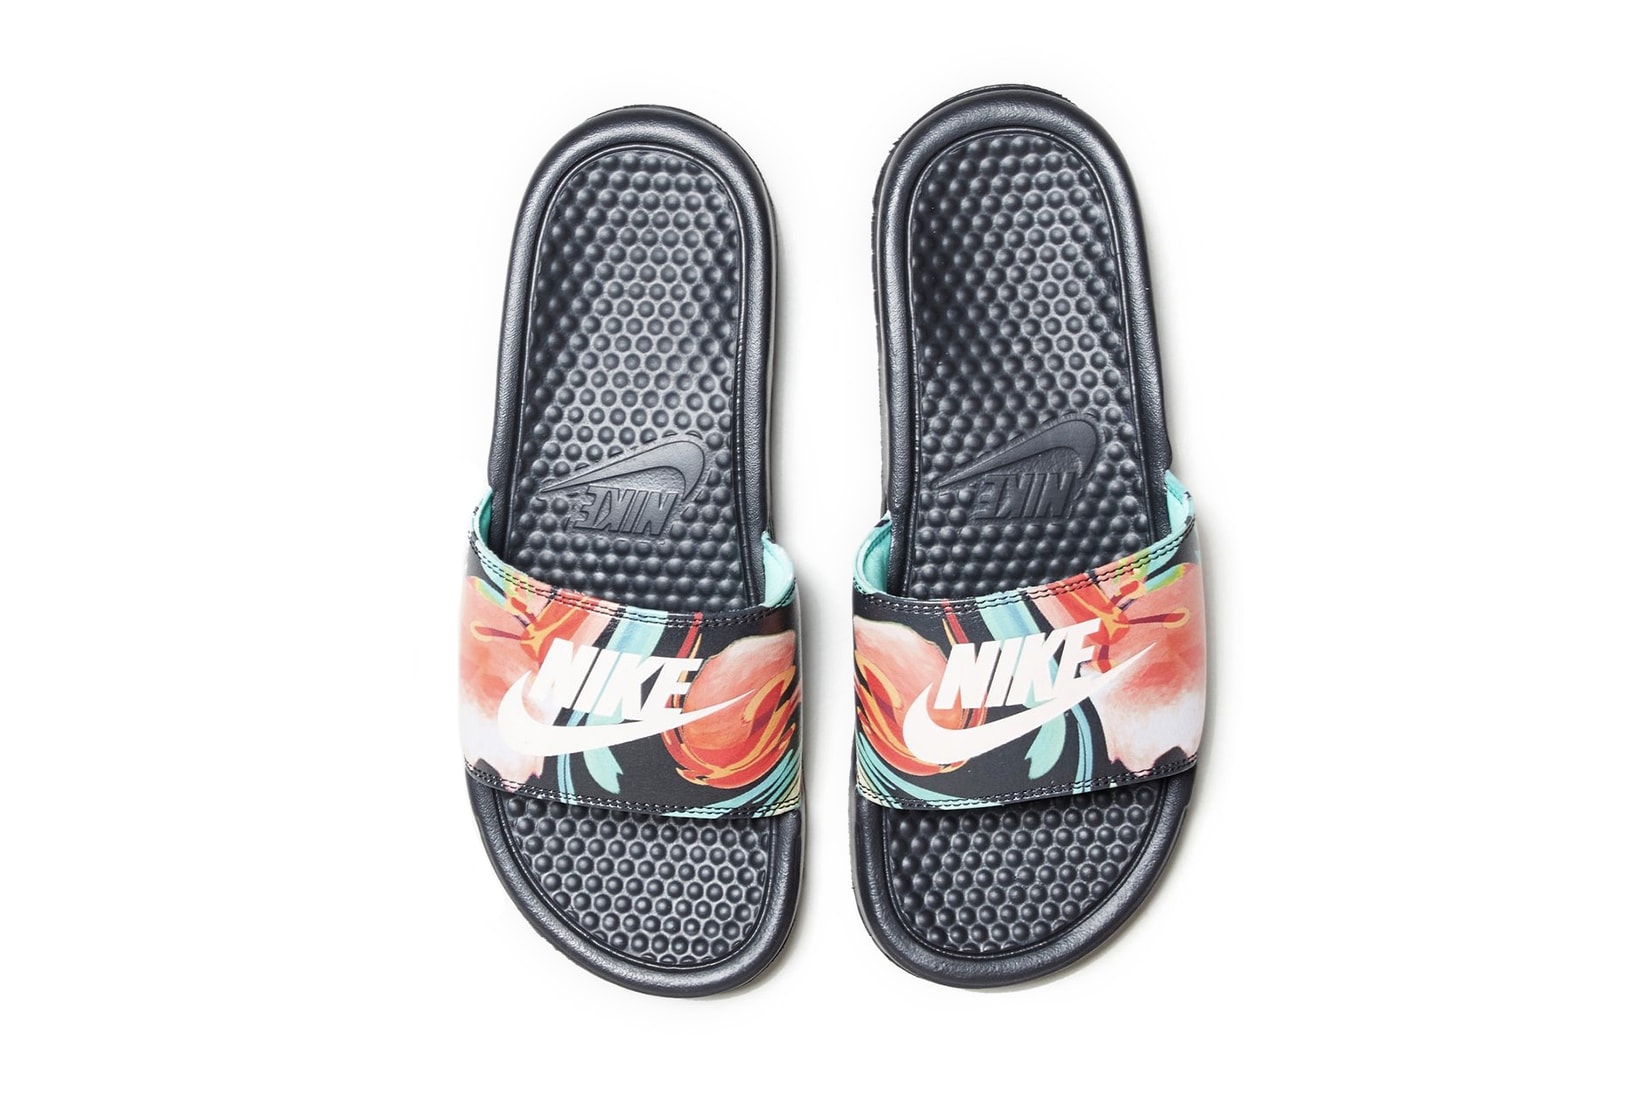 Nike Benassi Logo Floral Print Slides sandals slip-ons summer spring flower tropical pattern where to buy size?